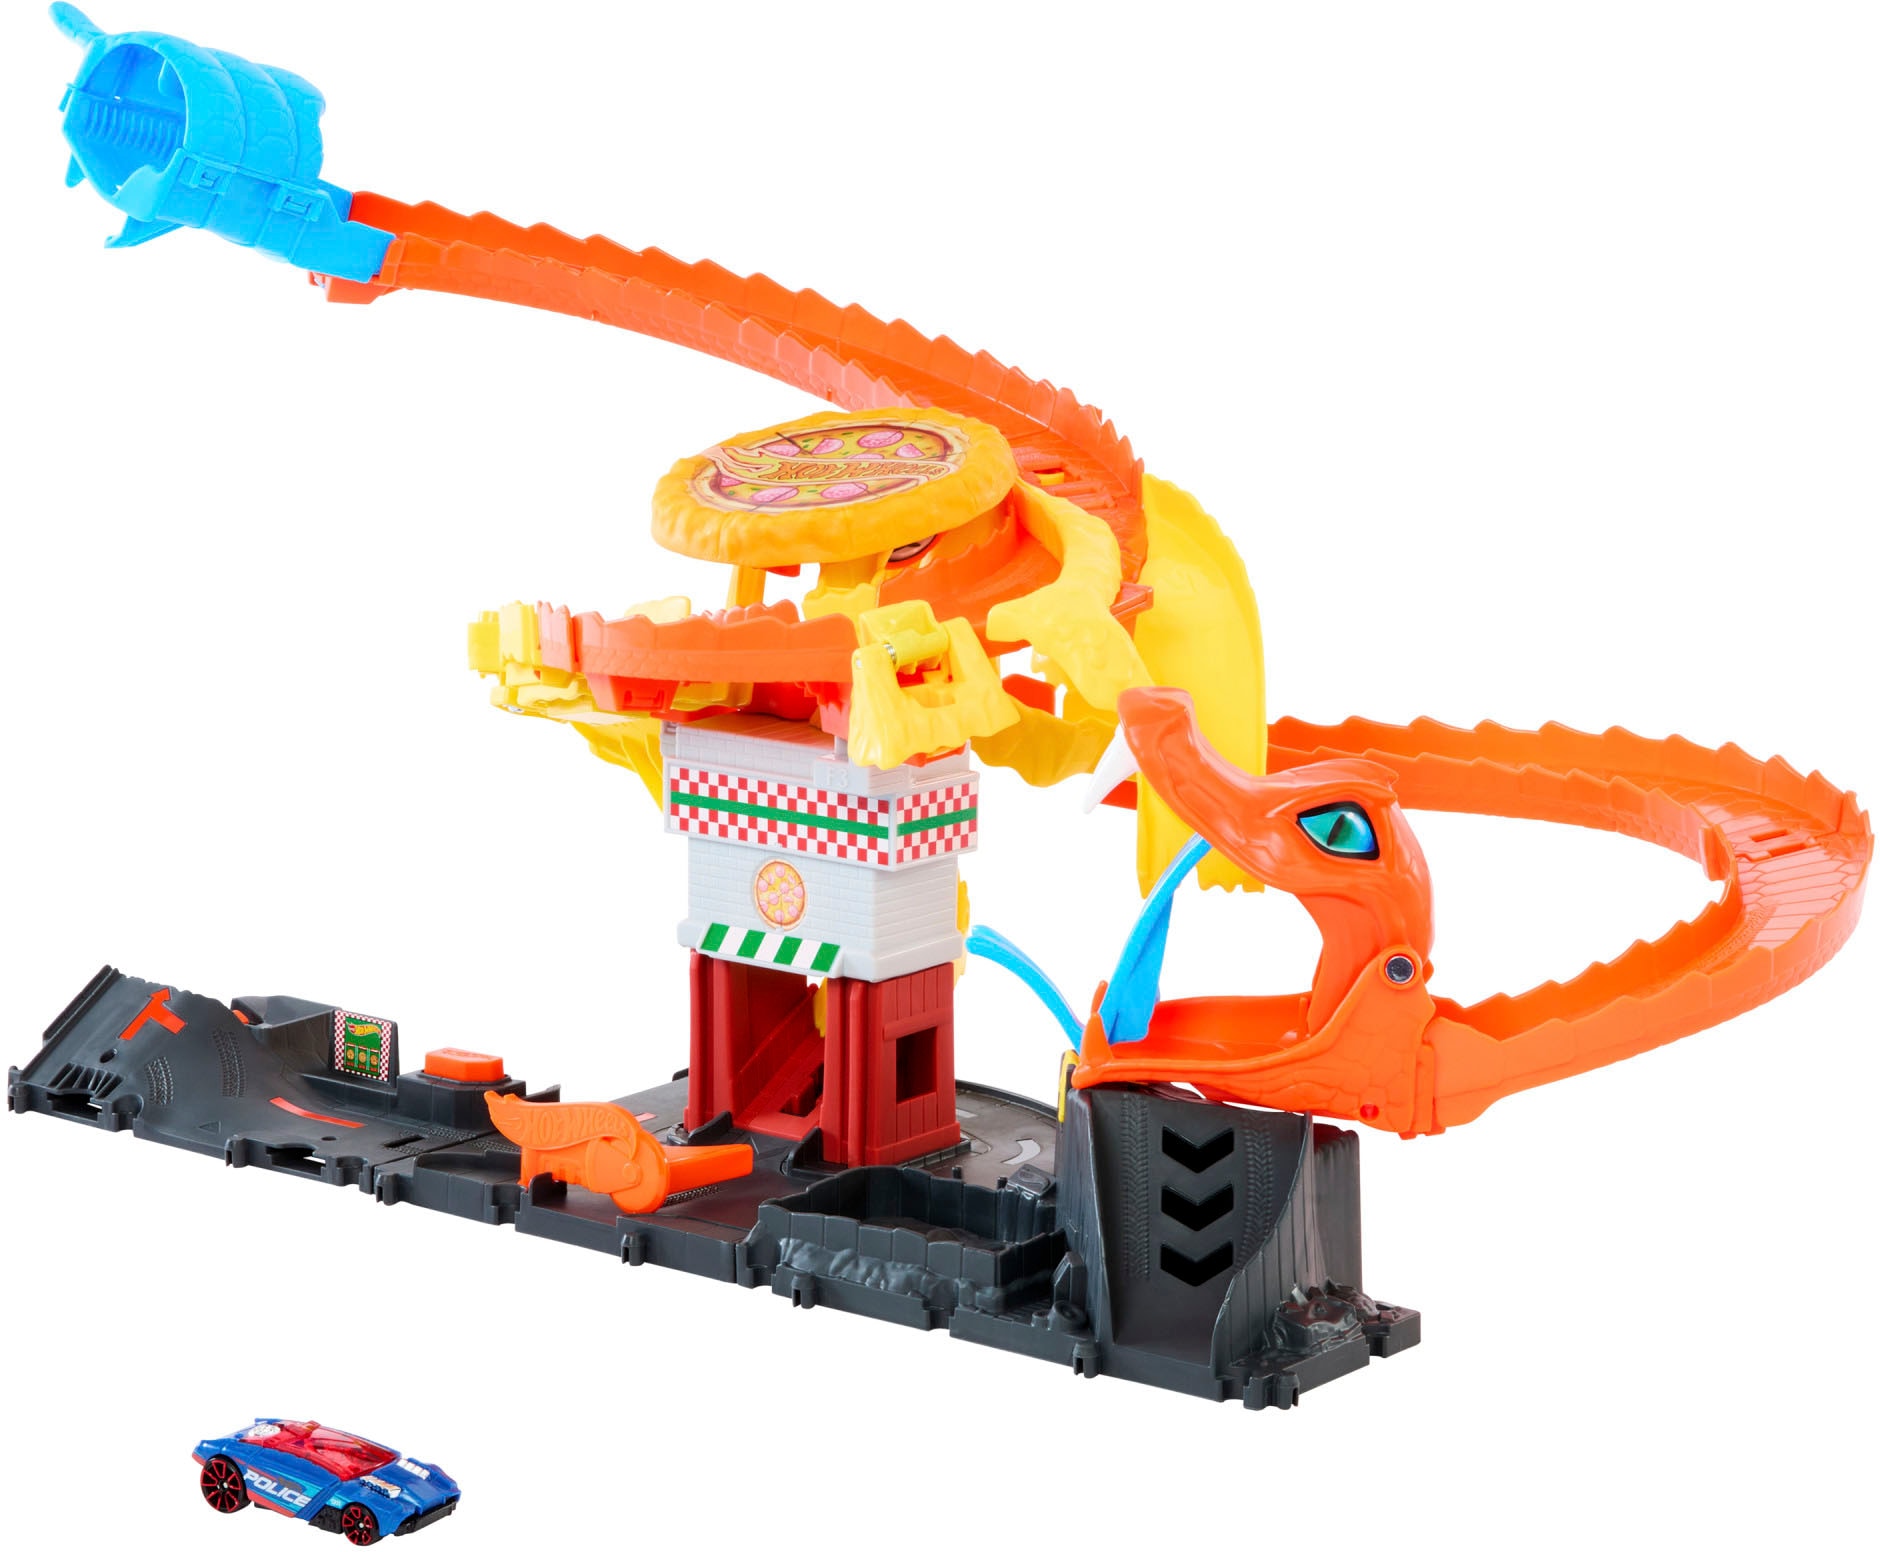 Hot Wheels Autorennbahn »City Cobra Slam Pizza Attack«, inklusive 1 Spielzeugauto